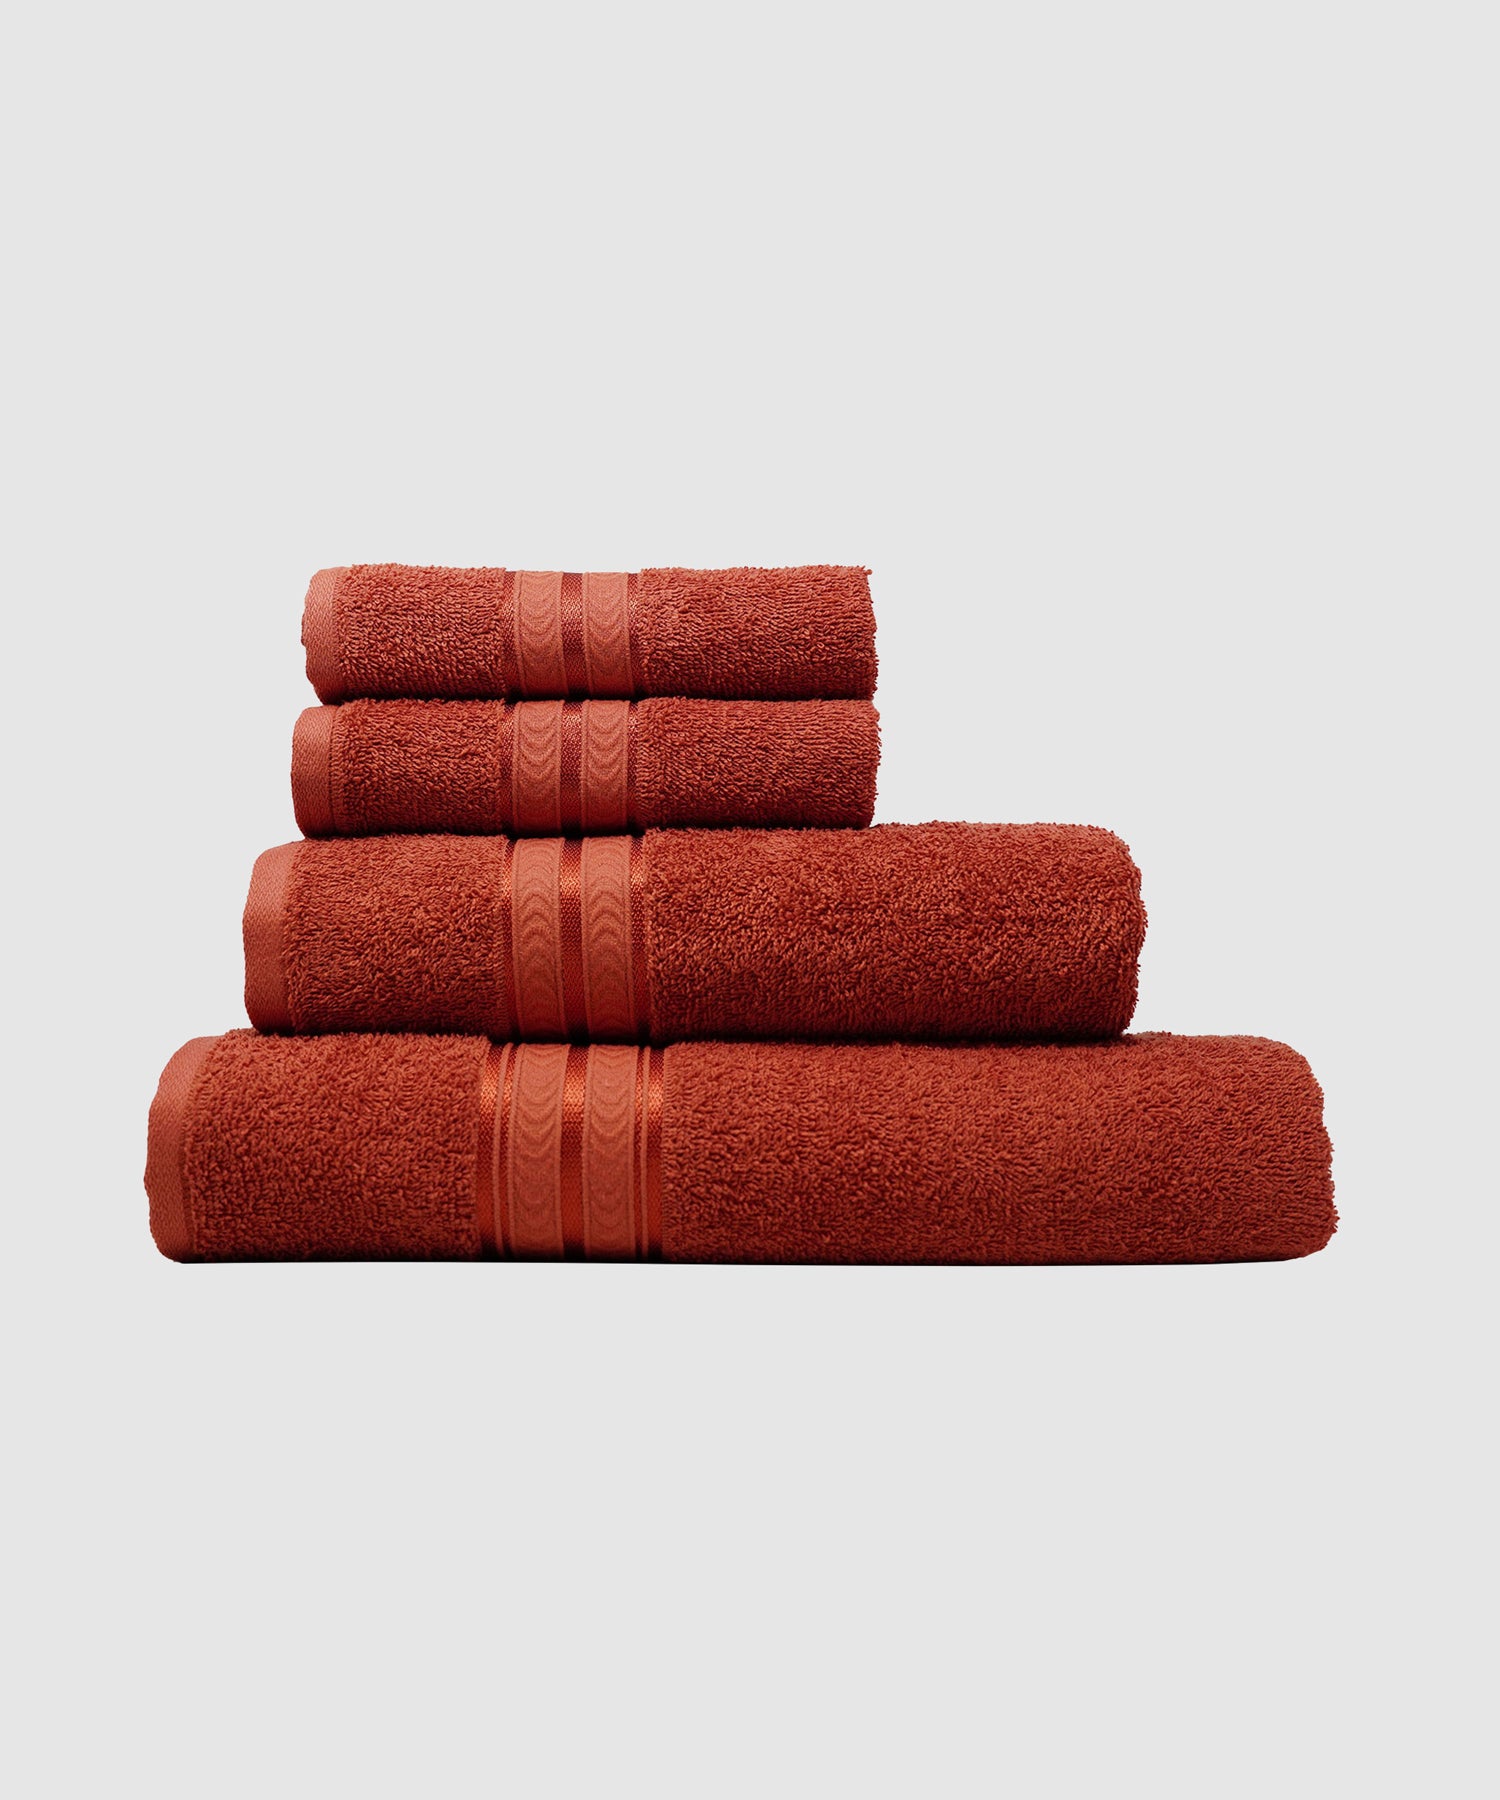 Celebration 4 PC Set 1 Bath Towel of 75 cm x 150 cm, 1 Small Bath Towel of 57 cm x 120 cm, 2 Hand Towels of 40 cm x 60 cm  RED RUST